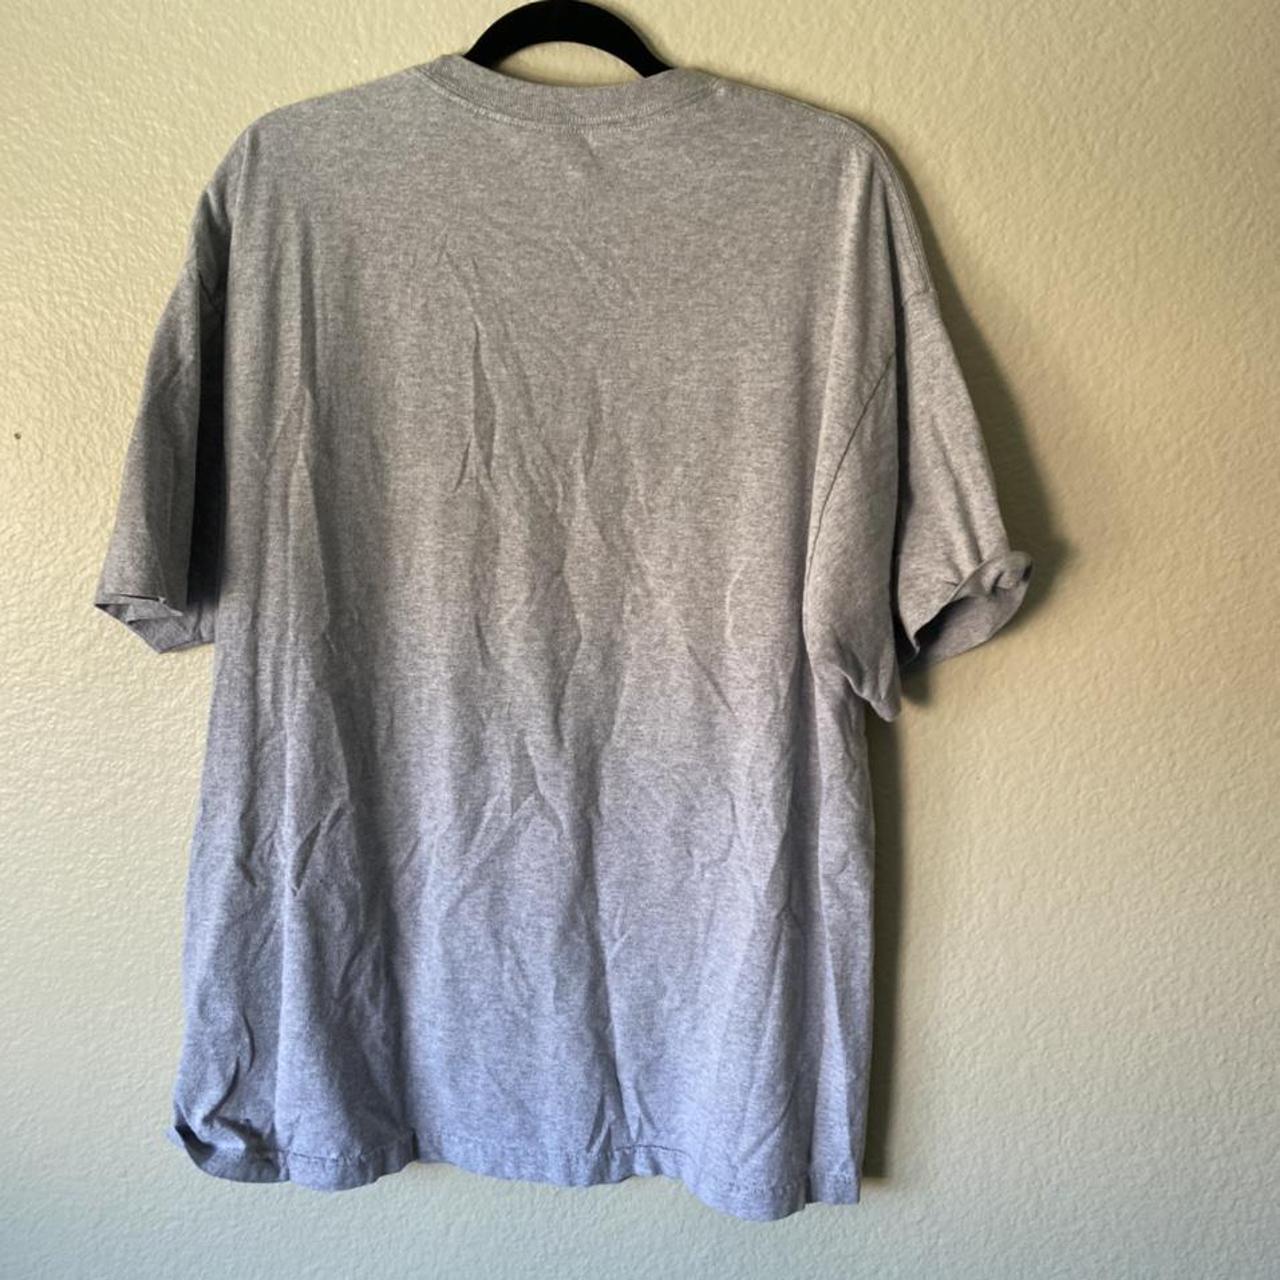 Men's T-shirt (2)